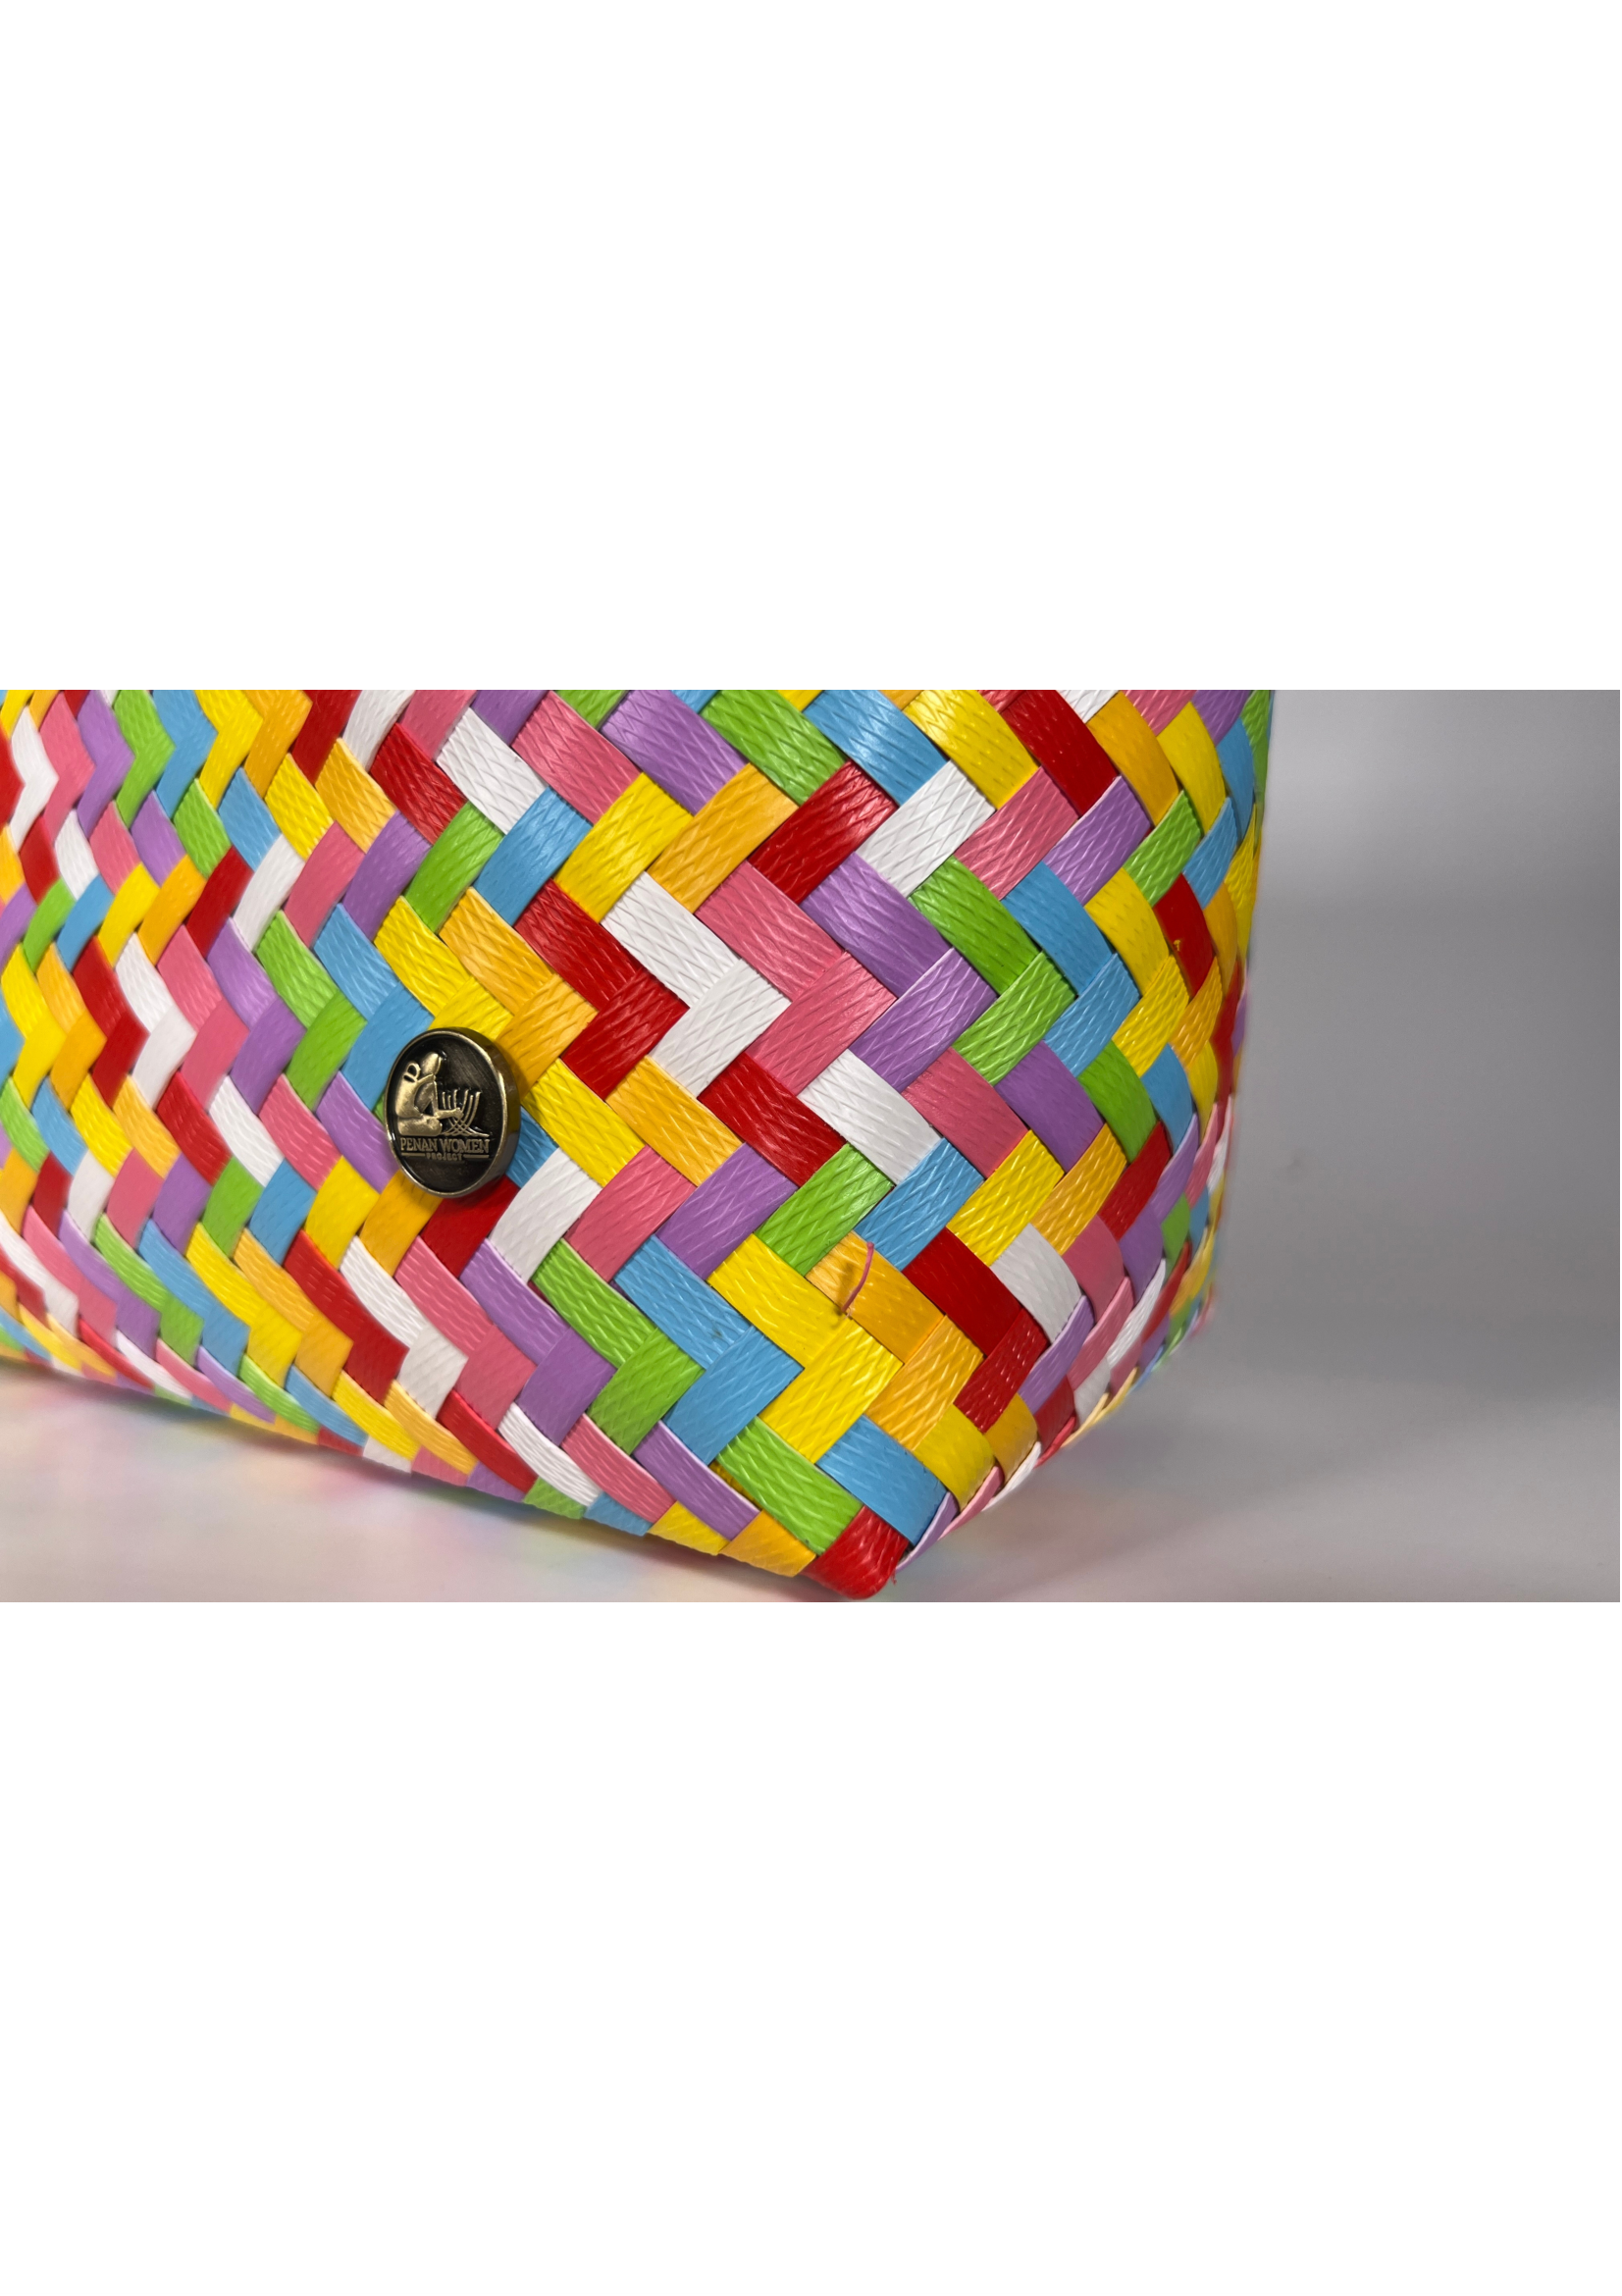 Pixel Candy Patterned Bag